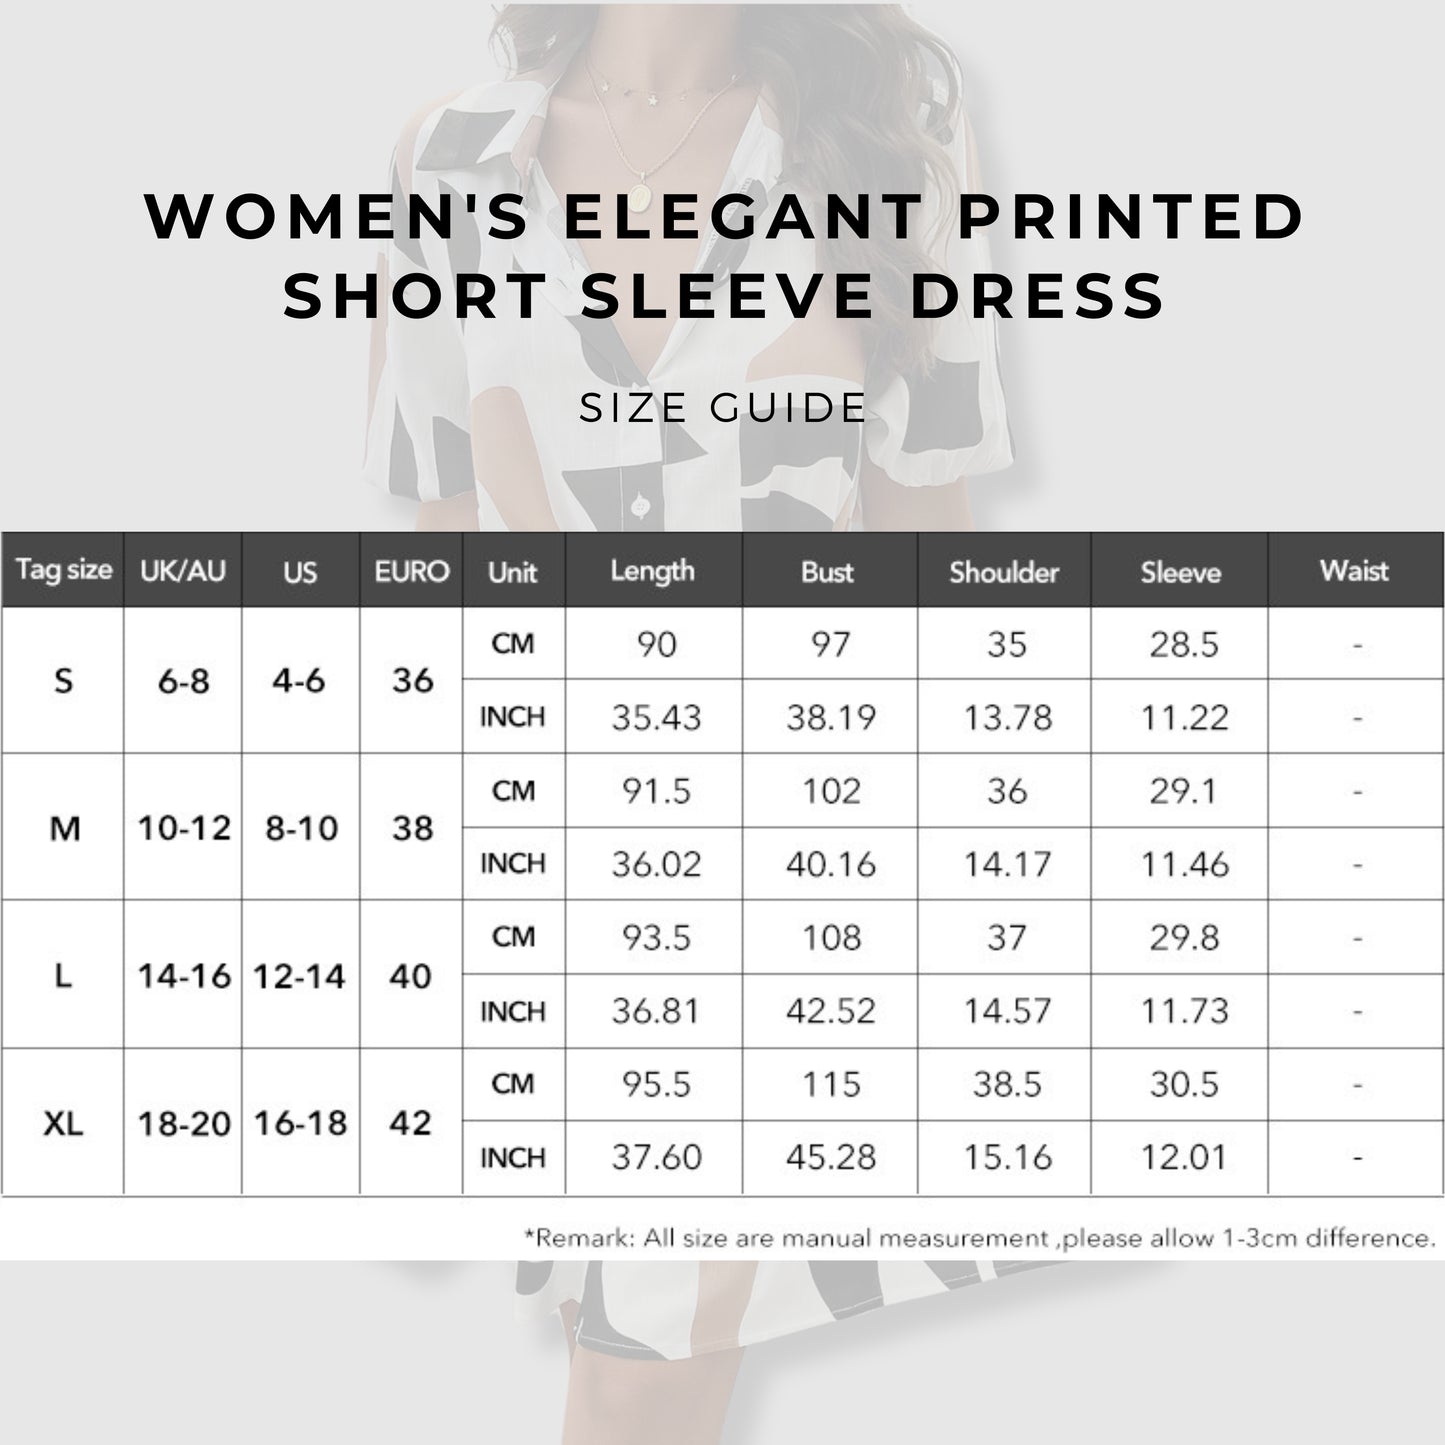 Women's Elegant Printed Short Sleeve Dress size